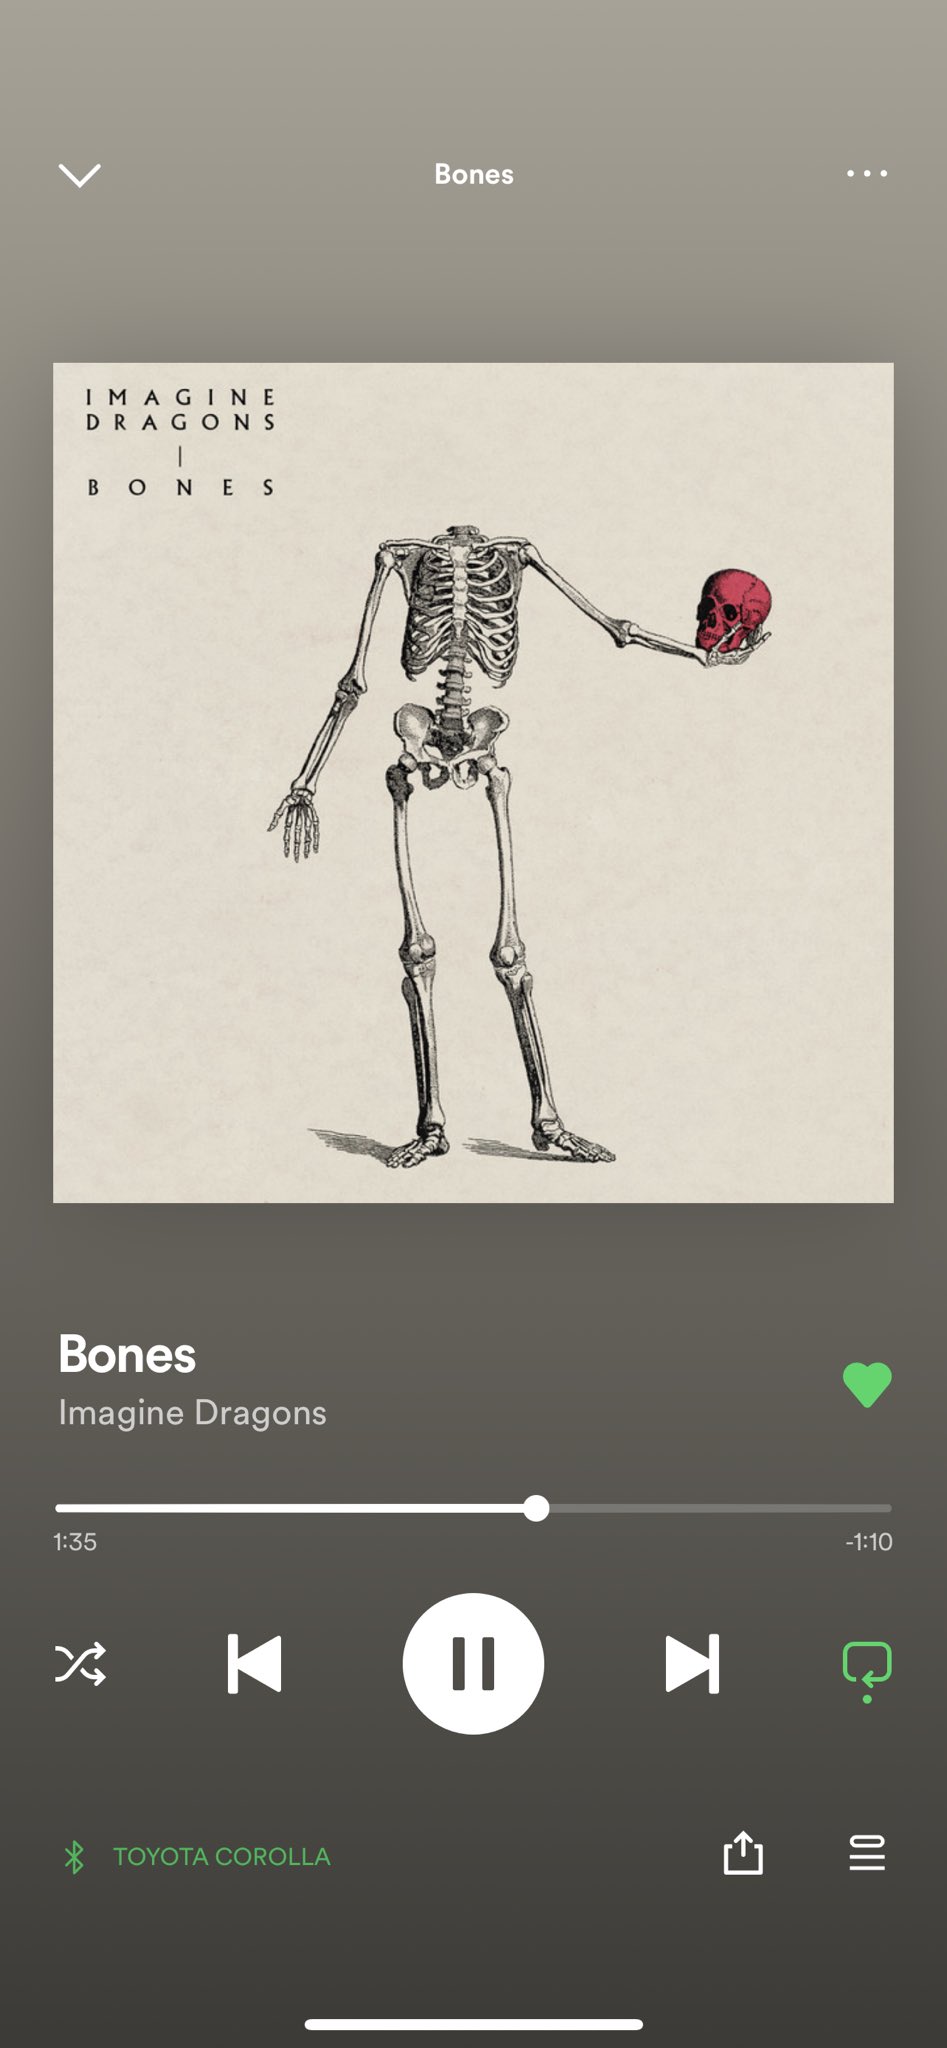 Imagine Dragons - “Bones” out now